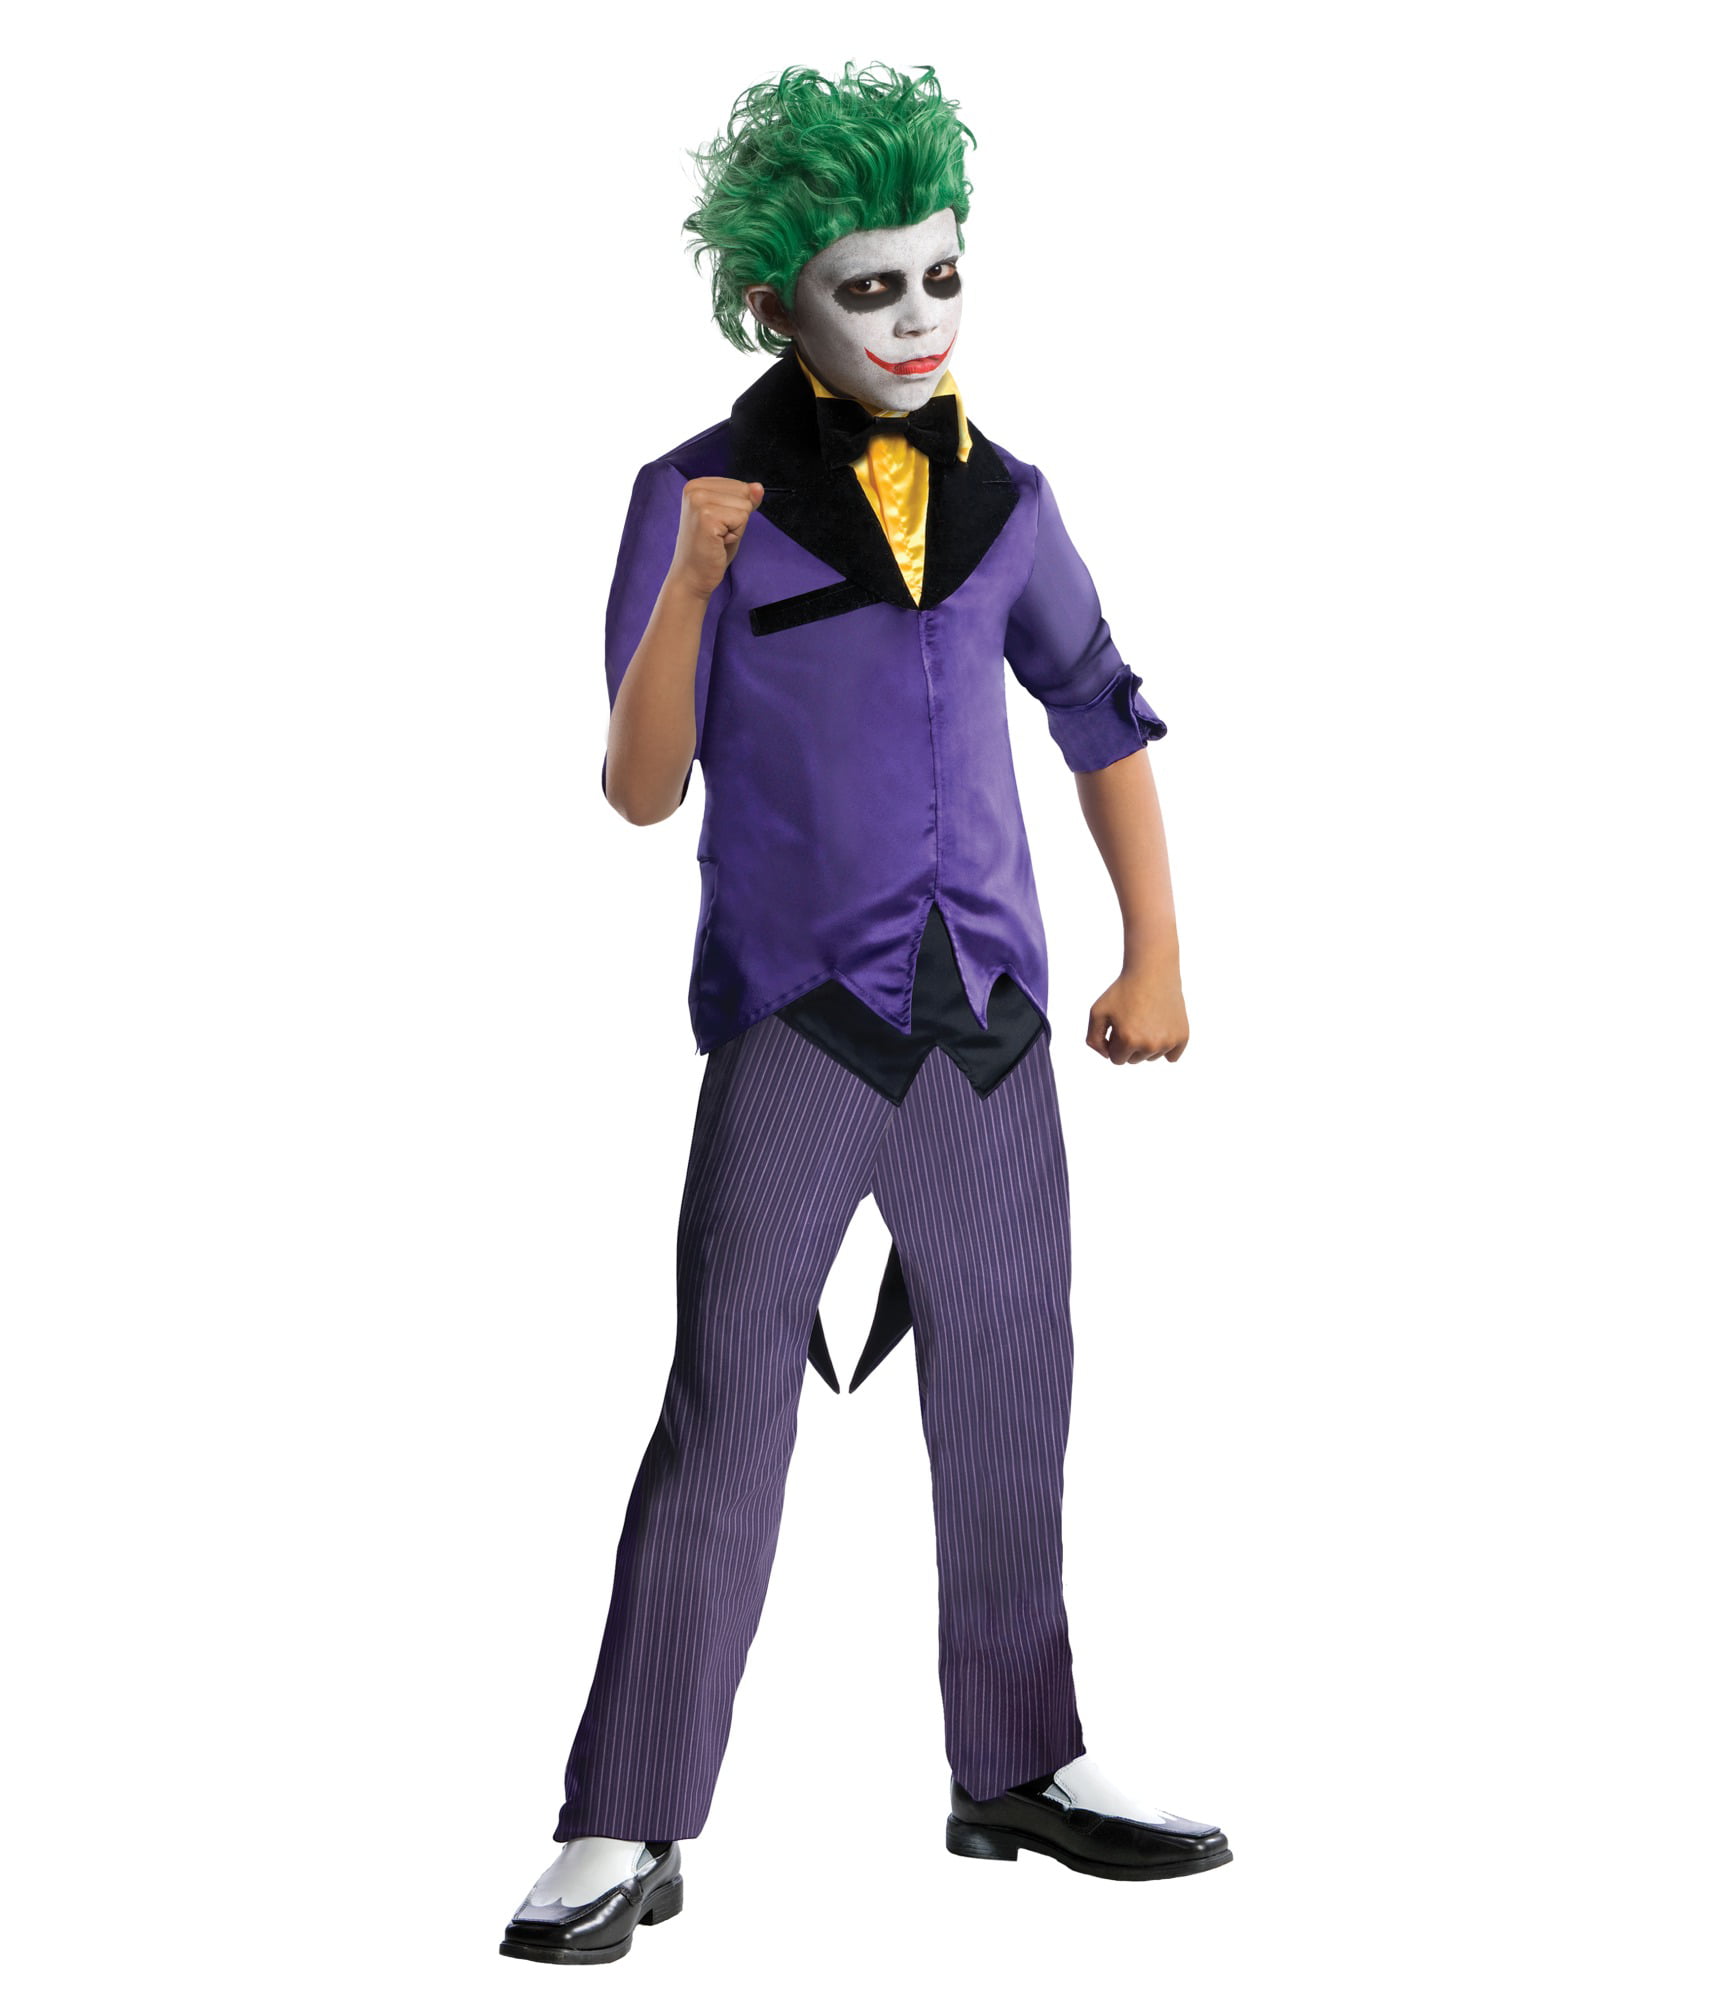 Batman The Dark Knight Rises Child Halloween Costume Walmartcom